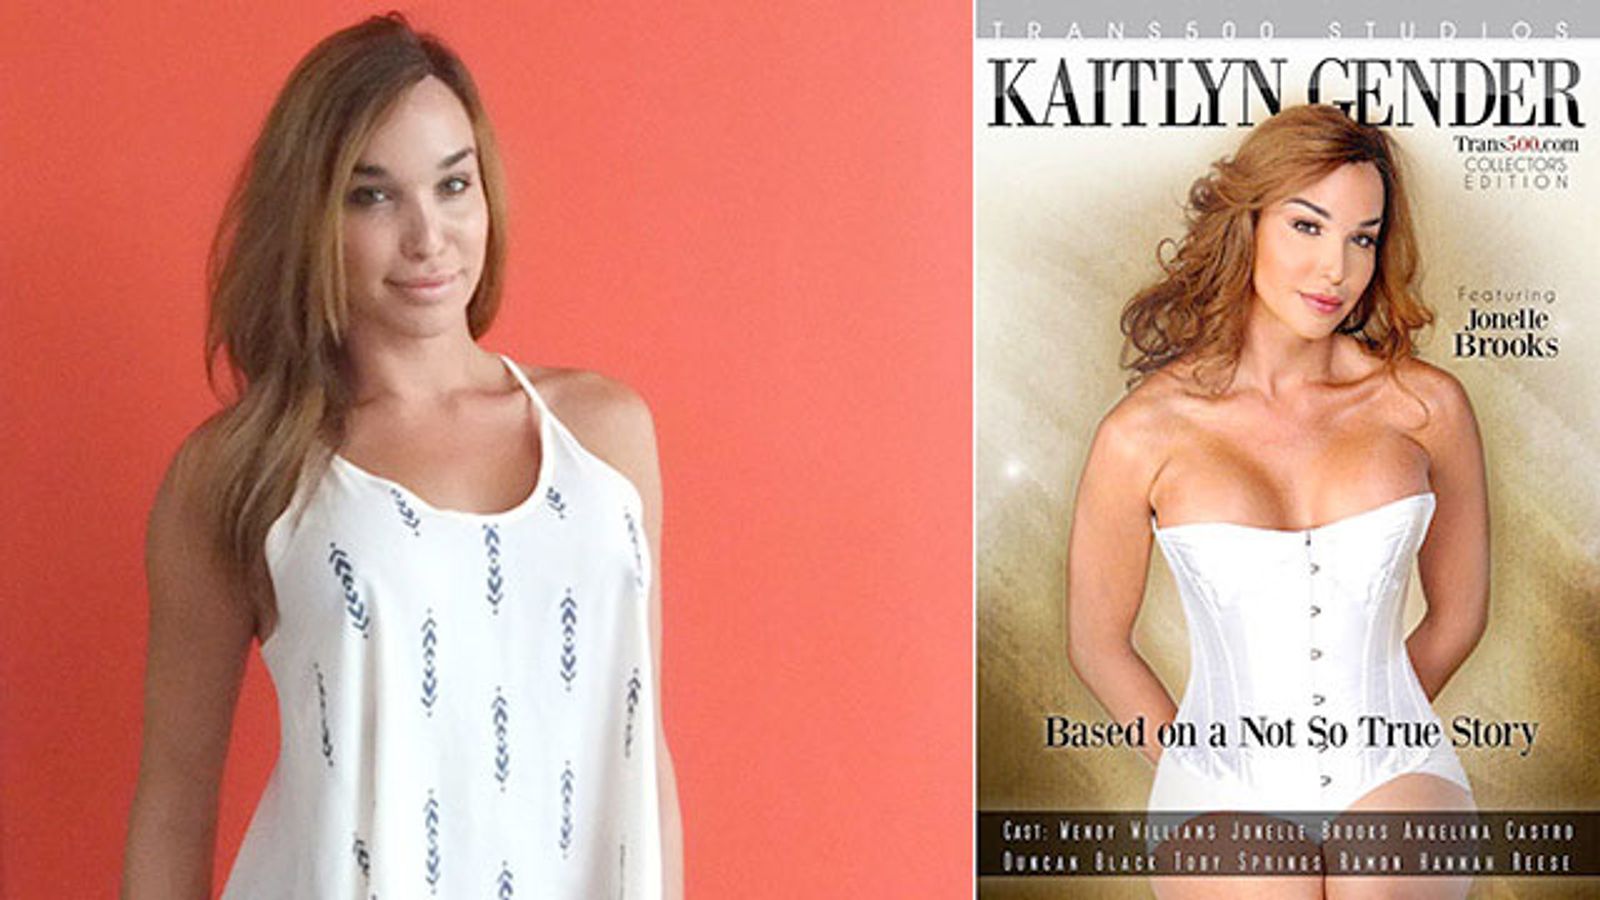 Is 'Kaitlyn Gender' the Breakout Role for Jonelle Brooks?